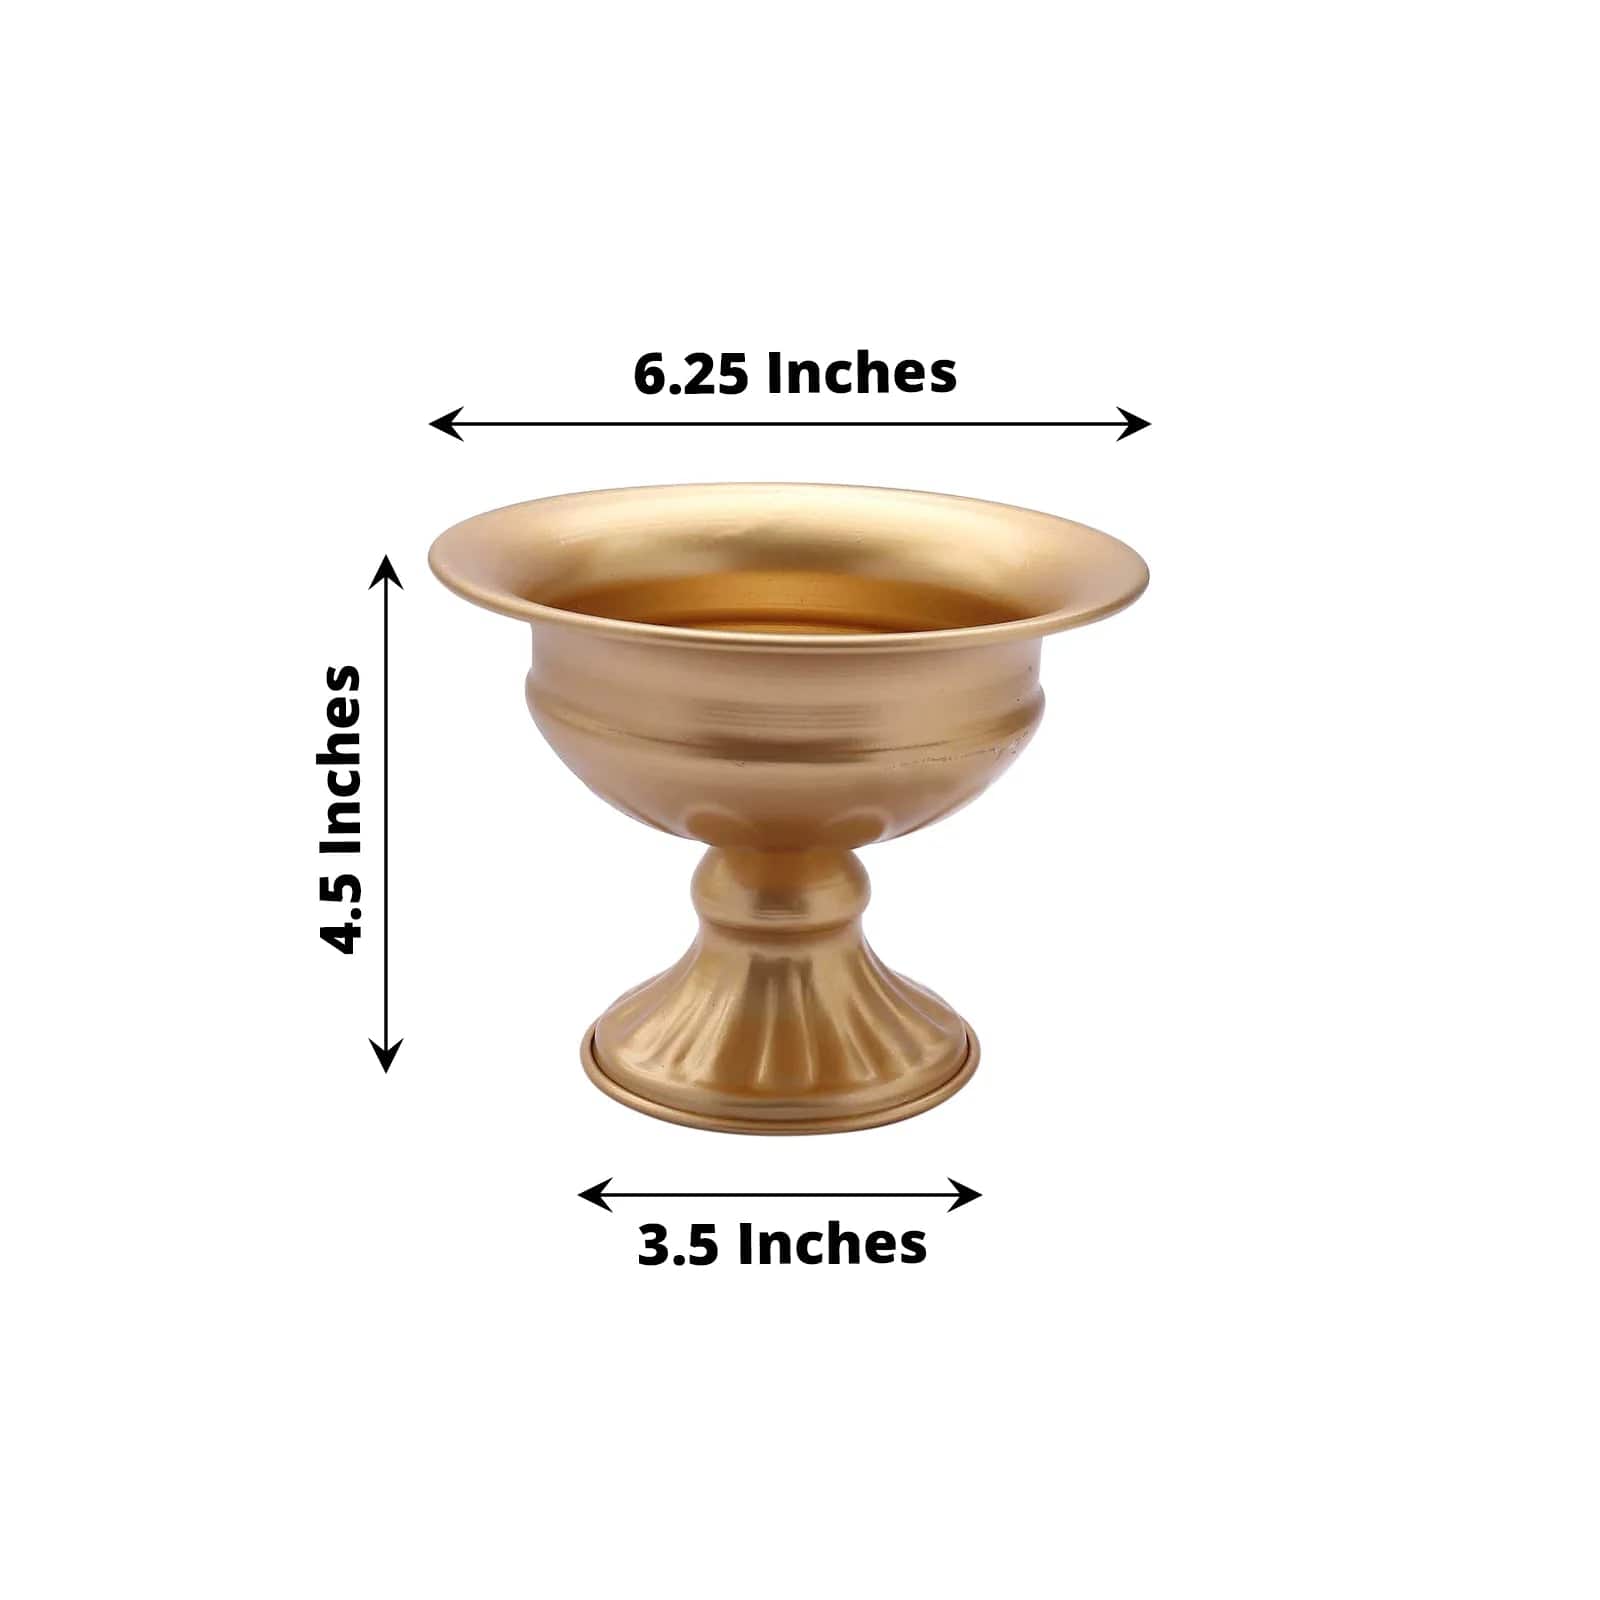 2 Gold 4 in Mini Compote Vases Wine Goblet Style Flower Pedestals Pots